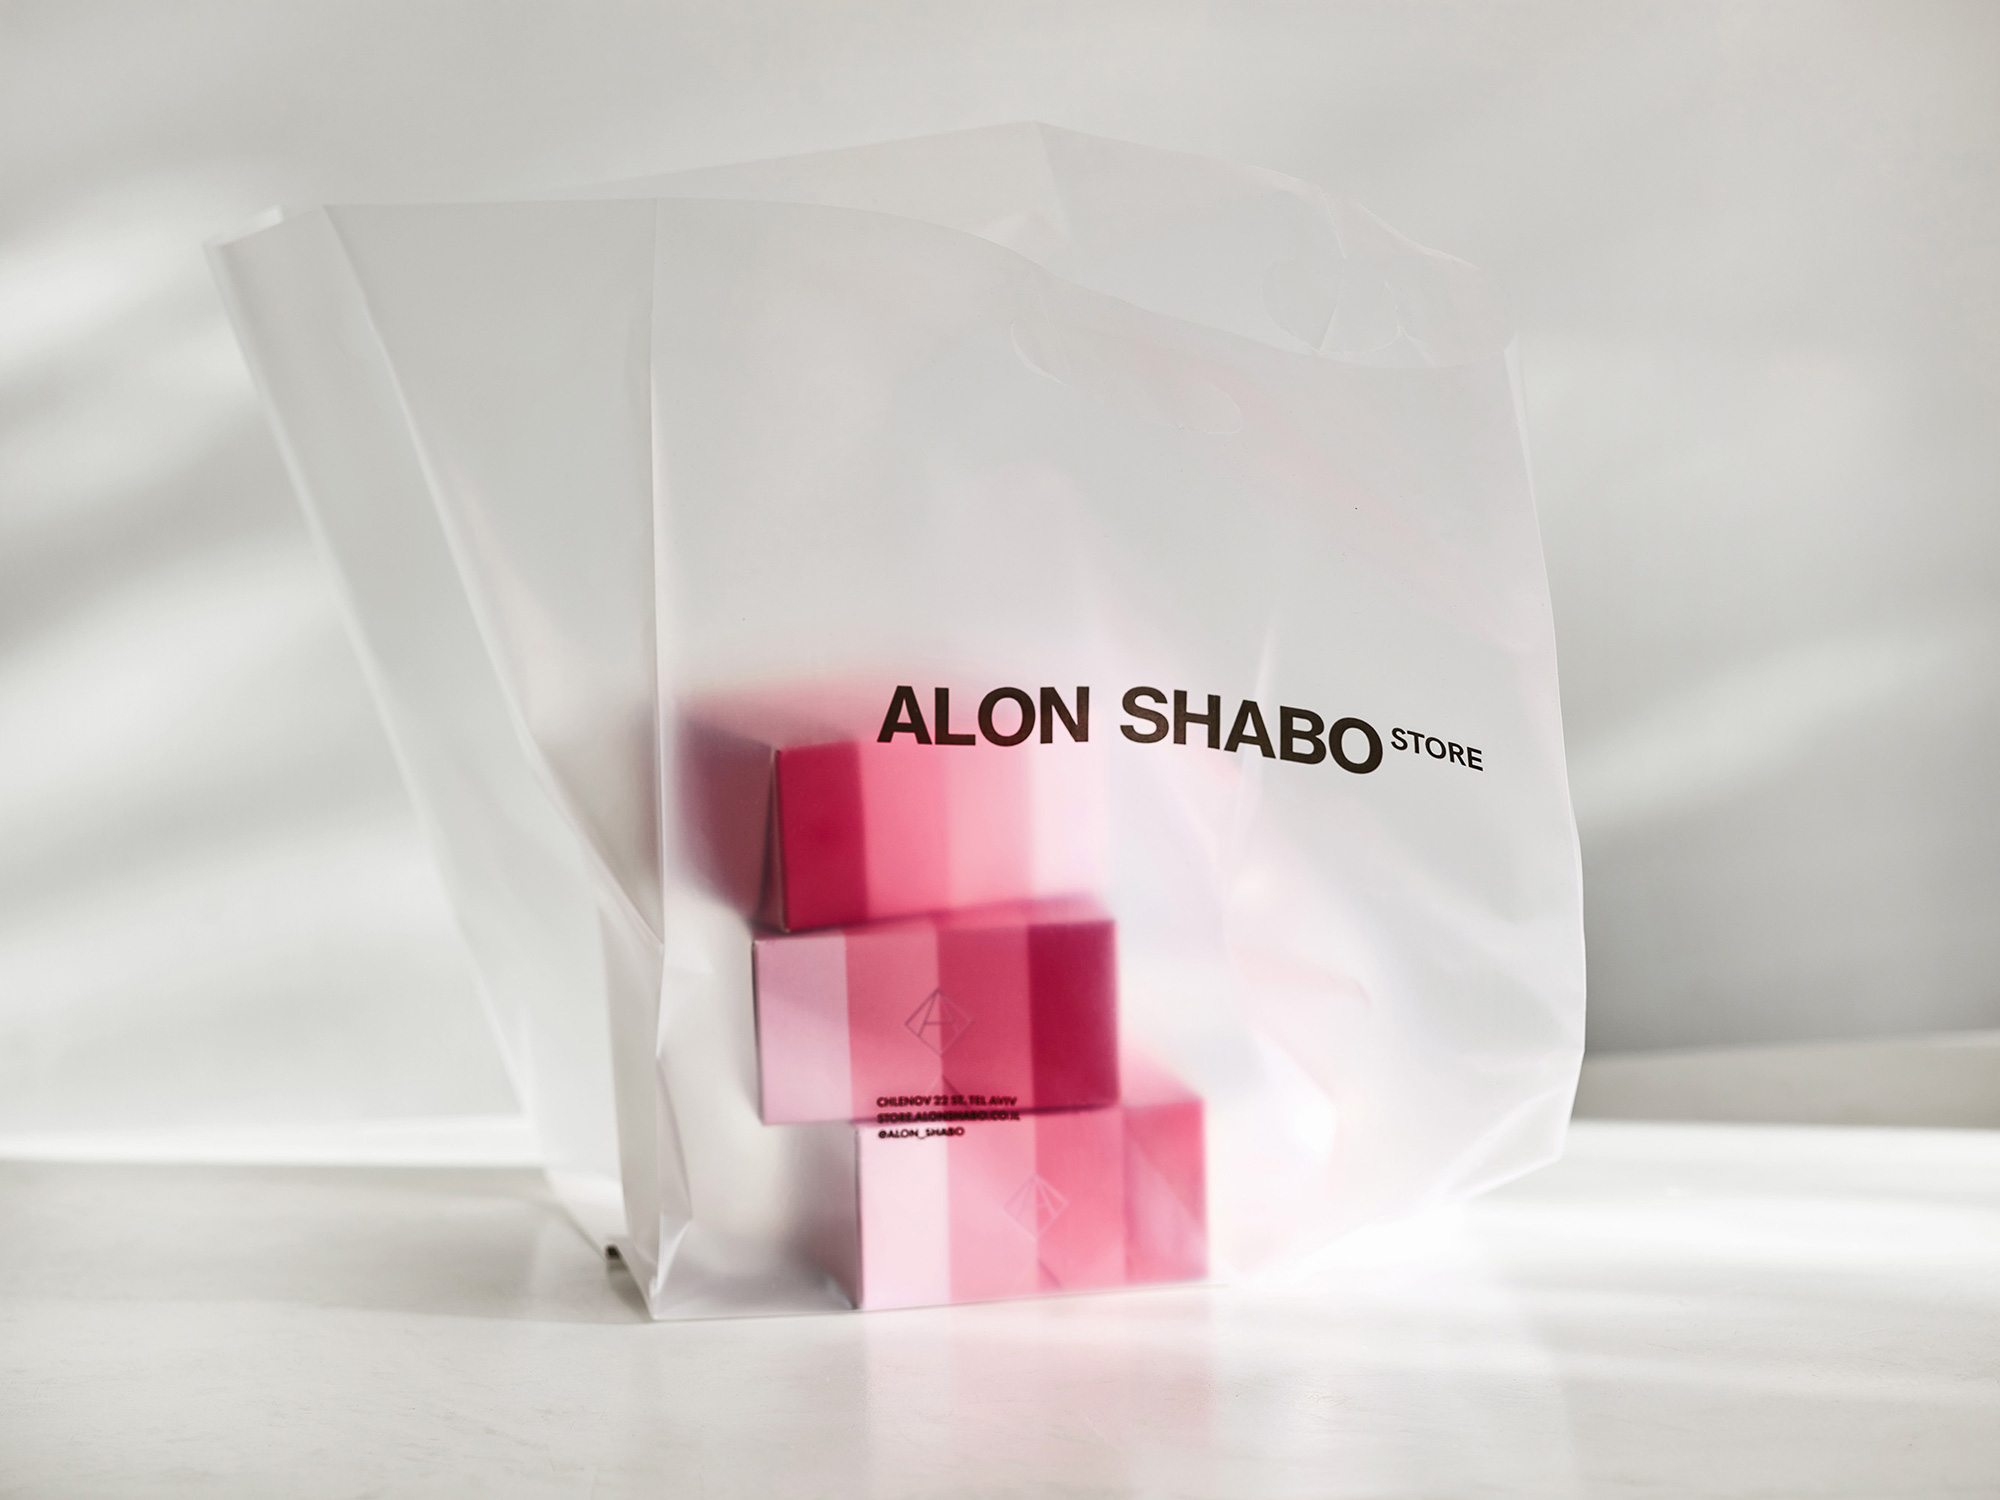 Alon Shabo logo on bag